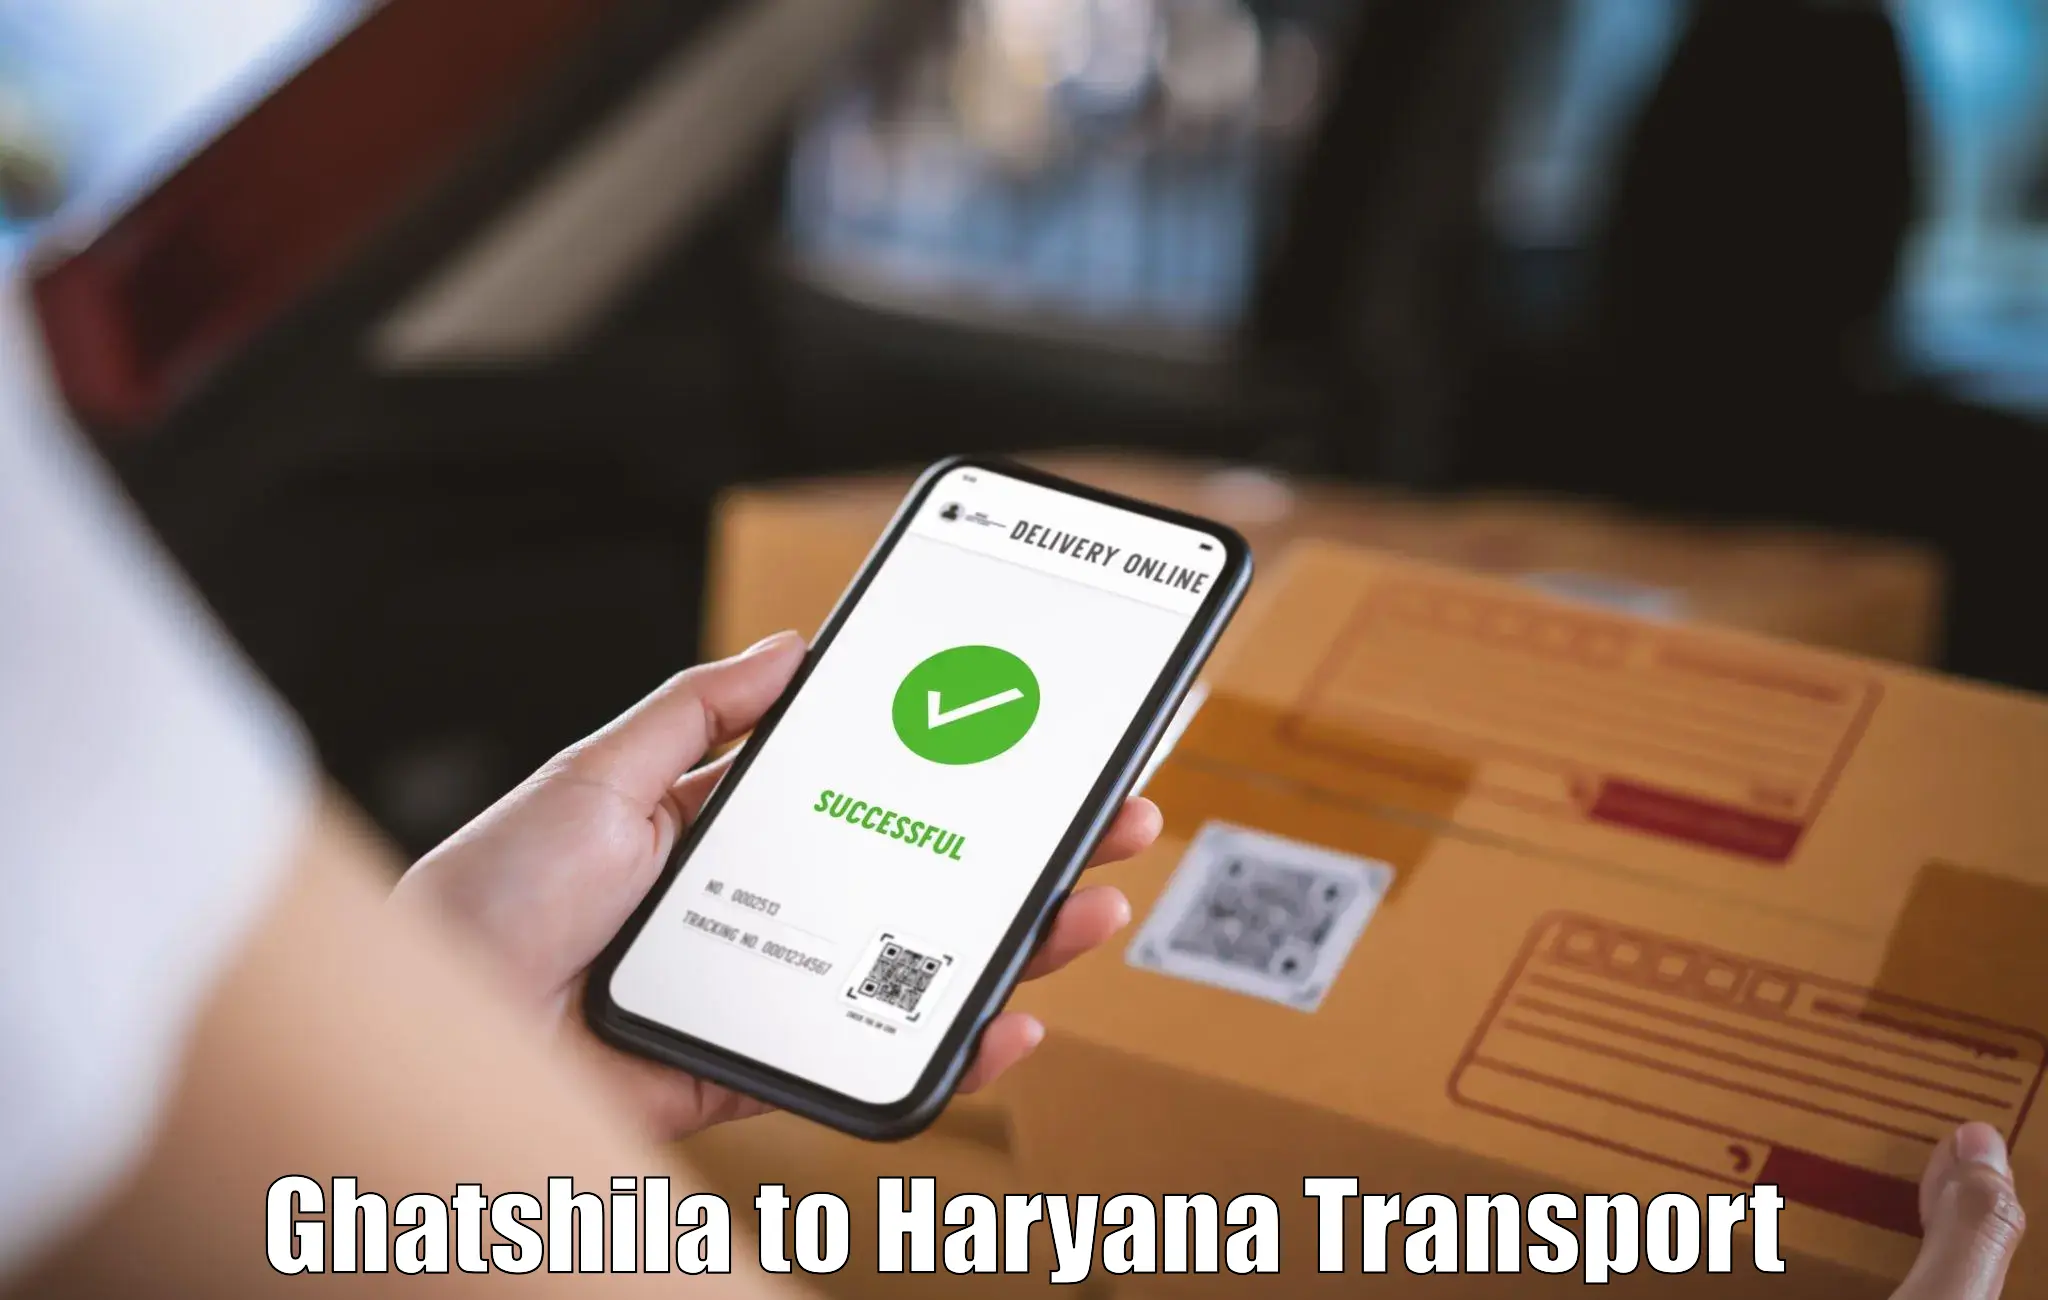 Transport in sharing in Ghatshila to Haryana